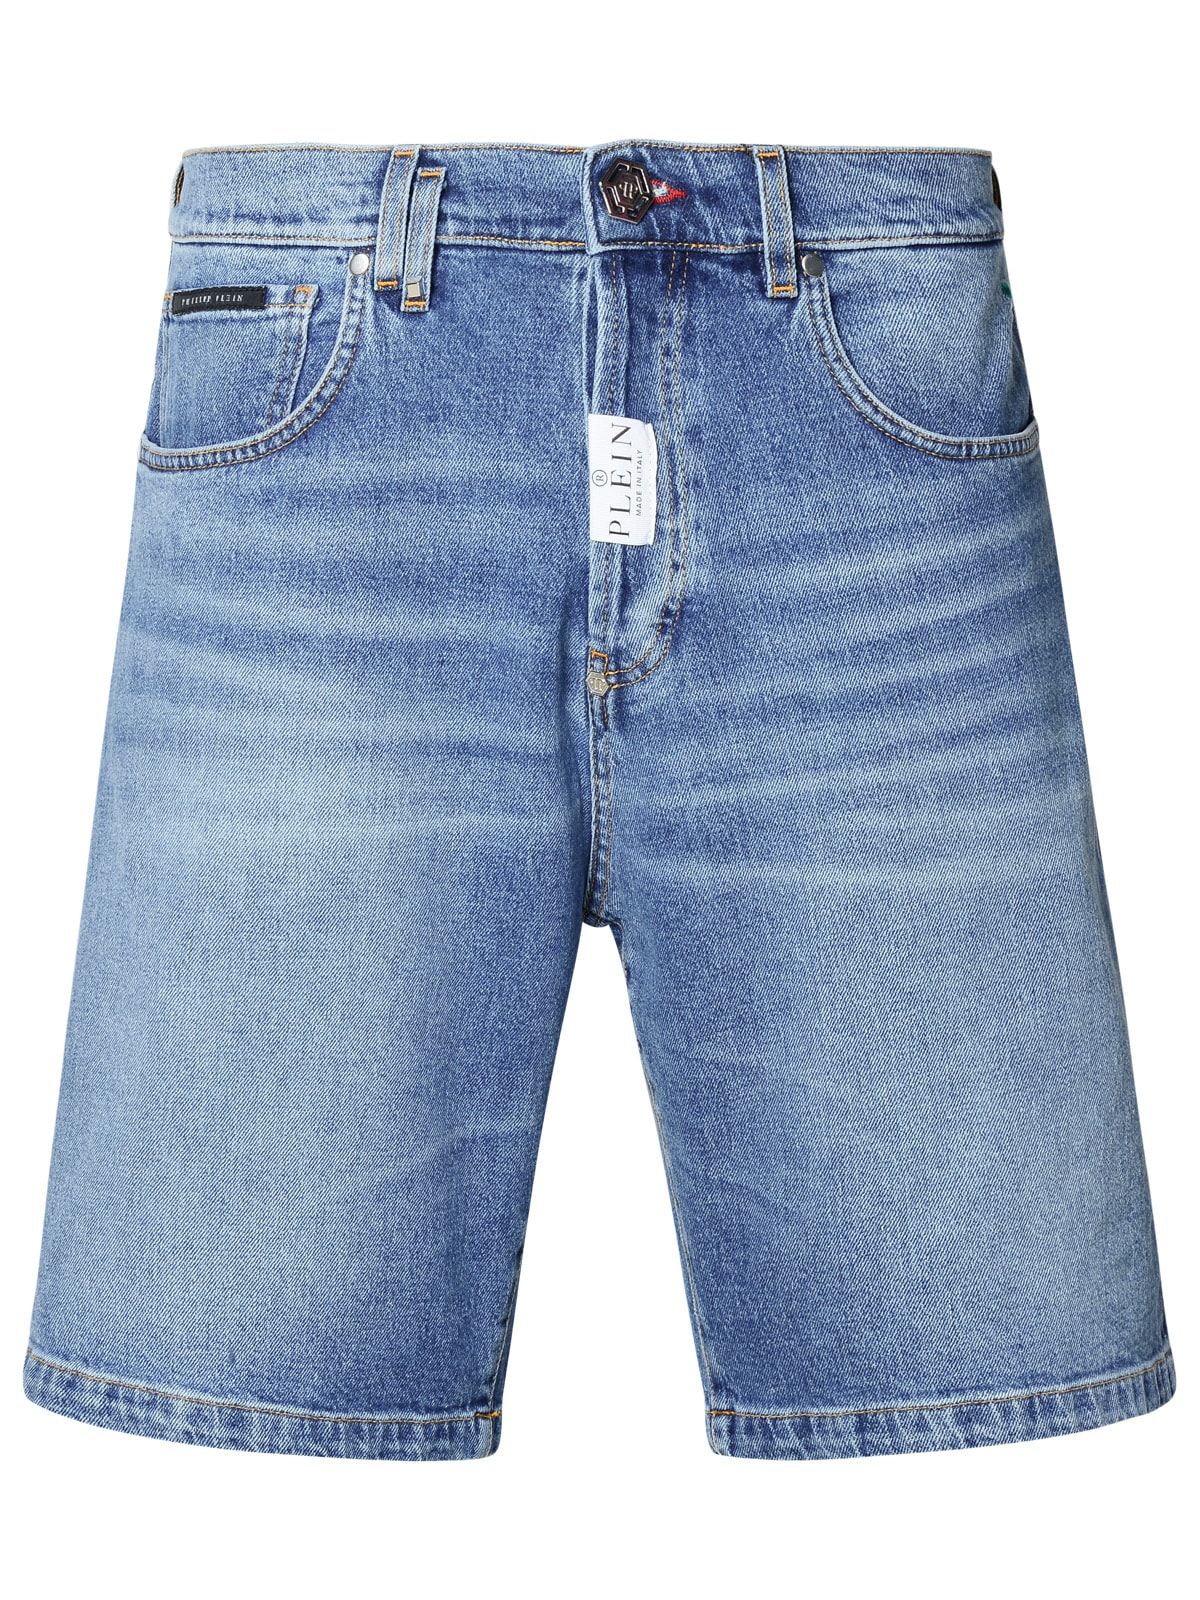 formantera Blue Cotton Bermuda Shorts